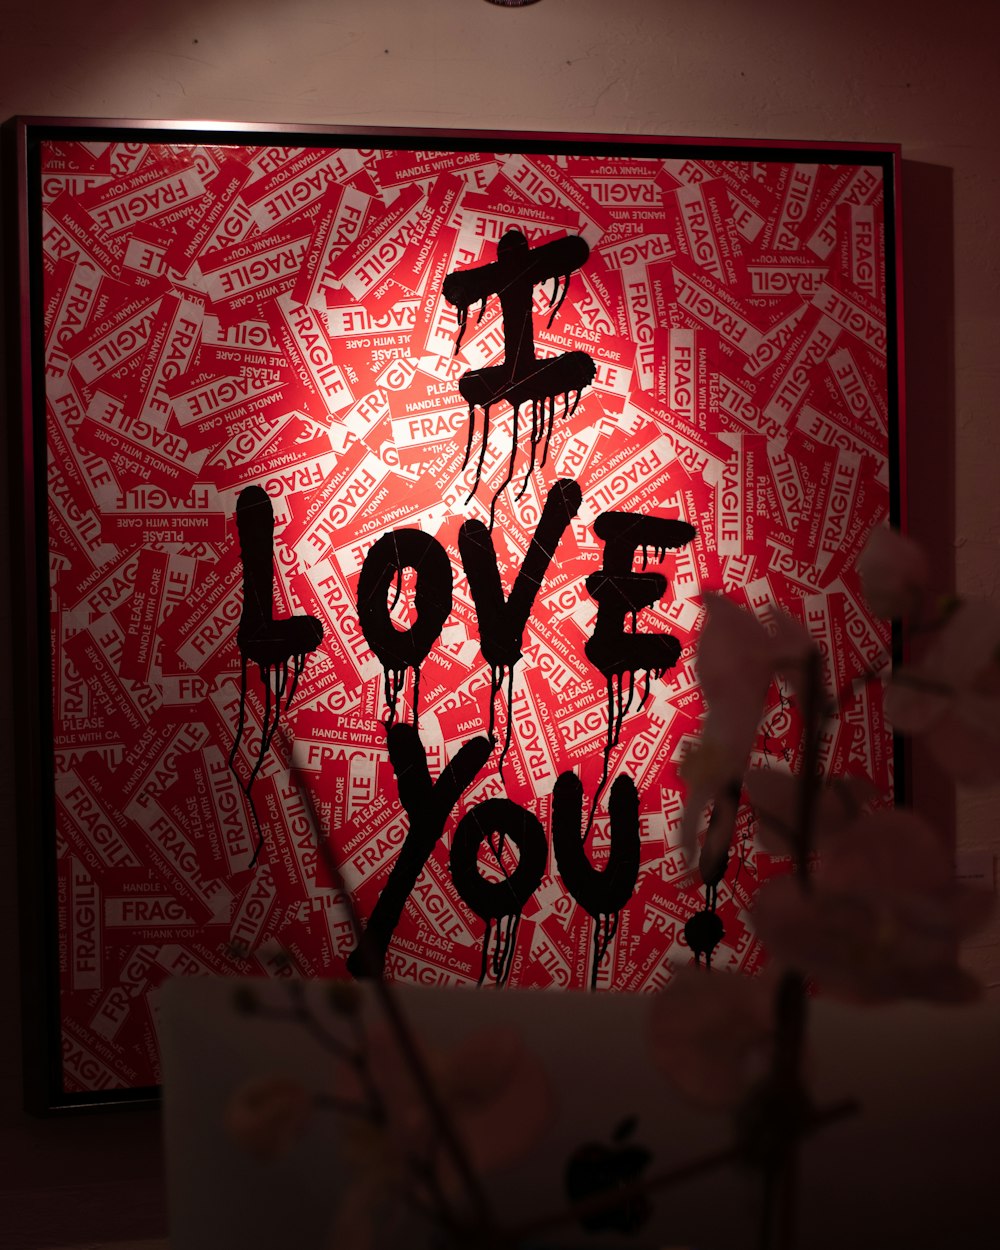 I Love You! wall decor photo – Free Valentine Image on Unsplash